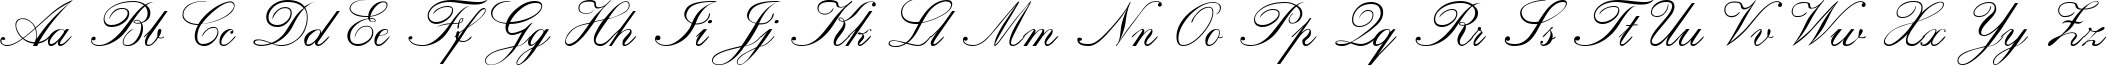 Пример написания английского алфавита шрифтом Calligraphia One